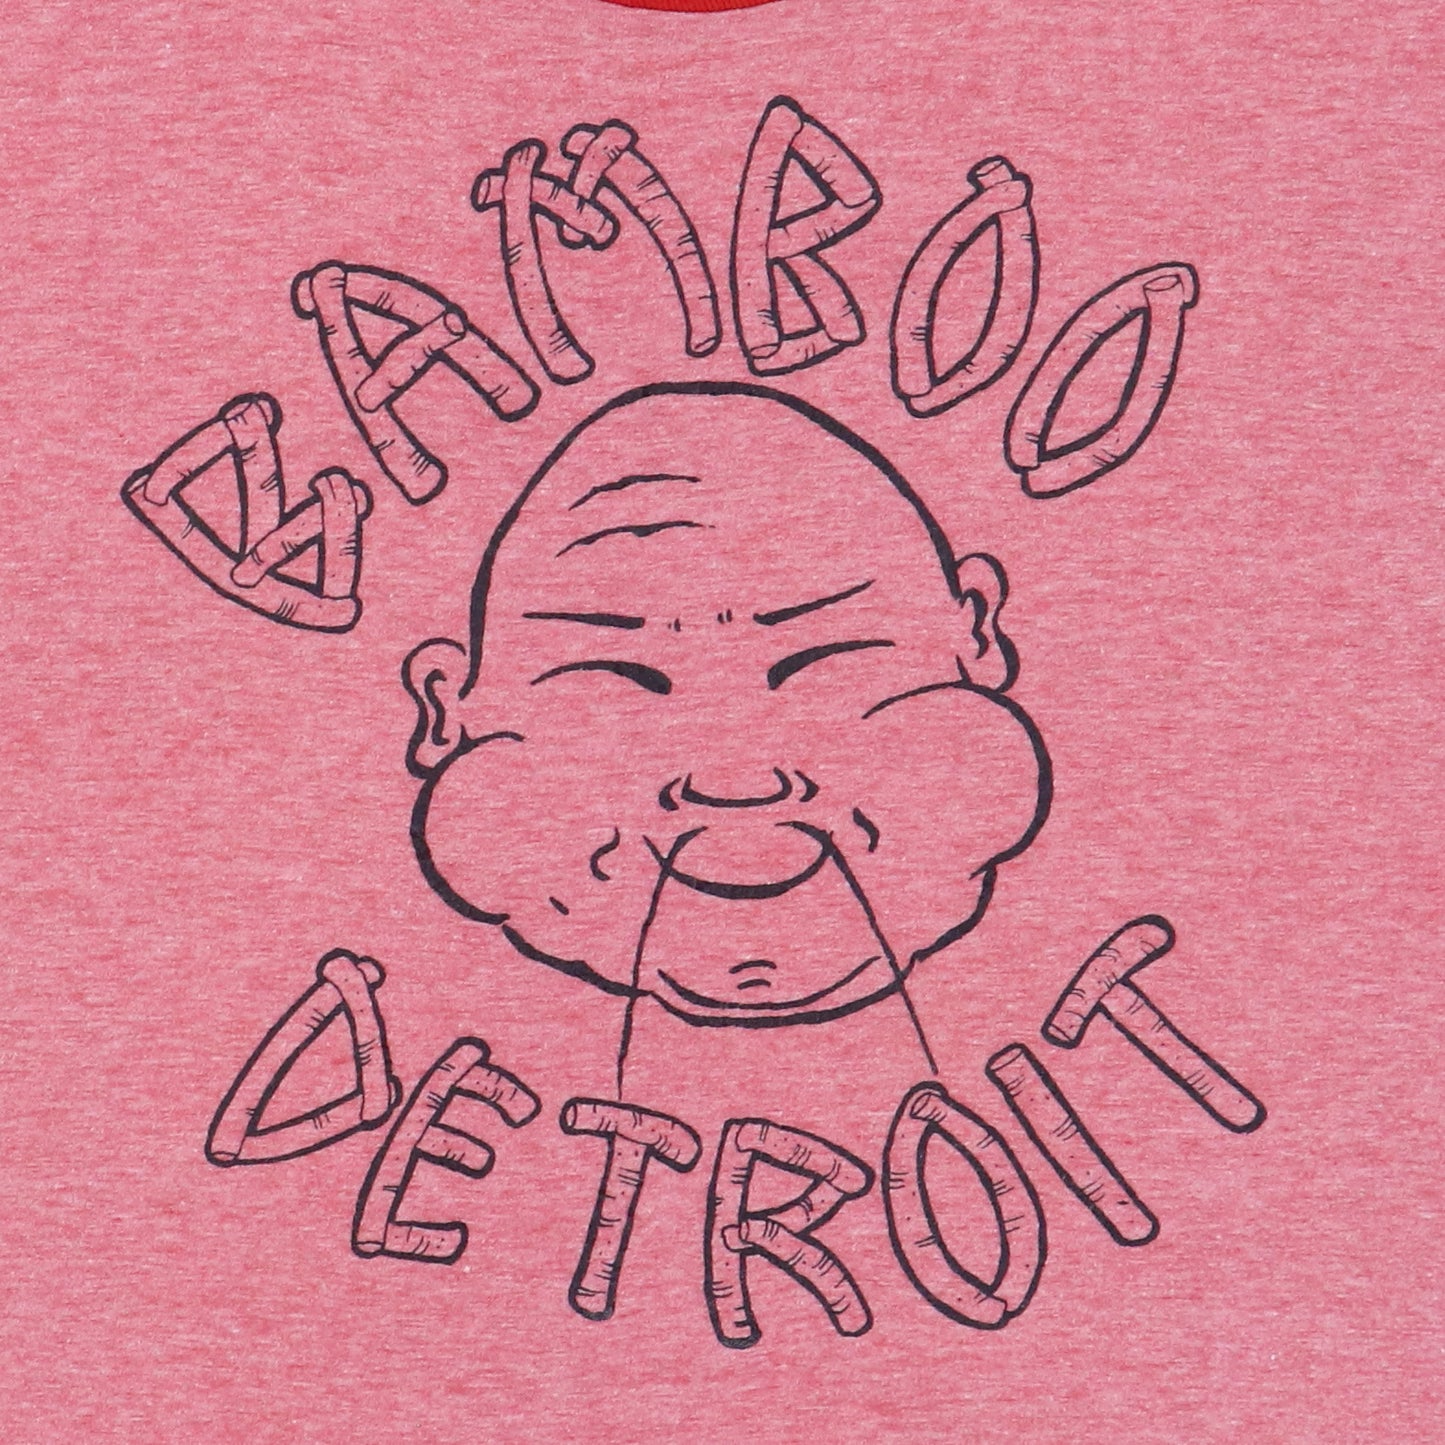 1970s Bamboo Productions Detroit Shirt